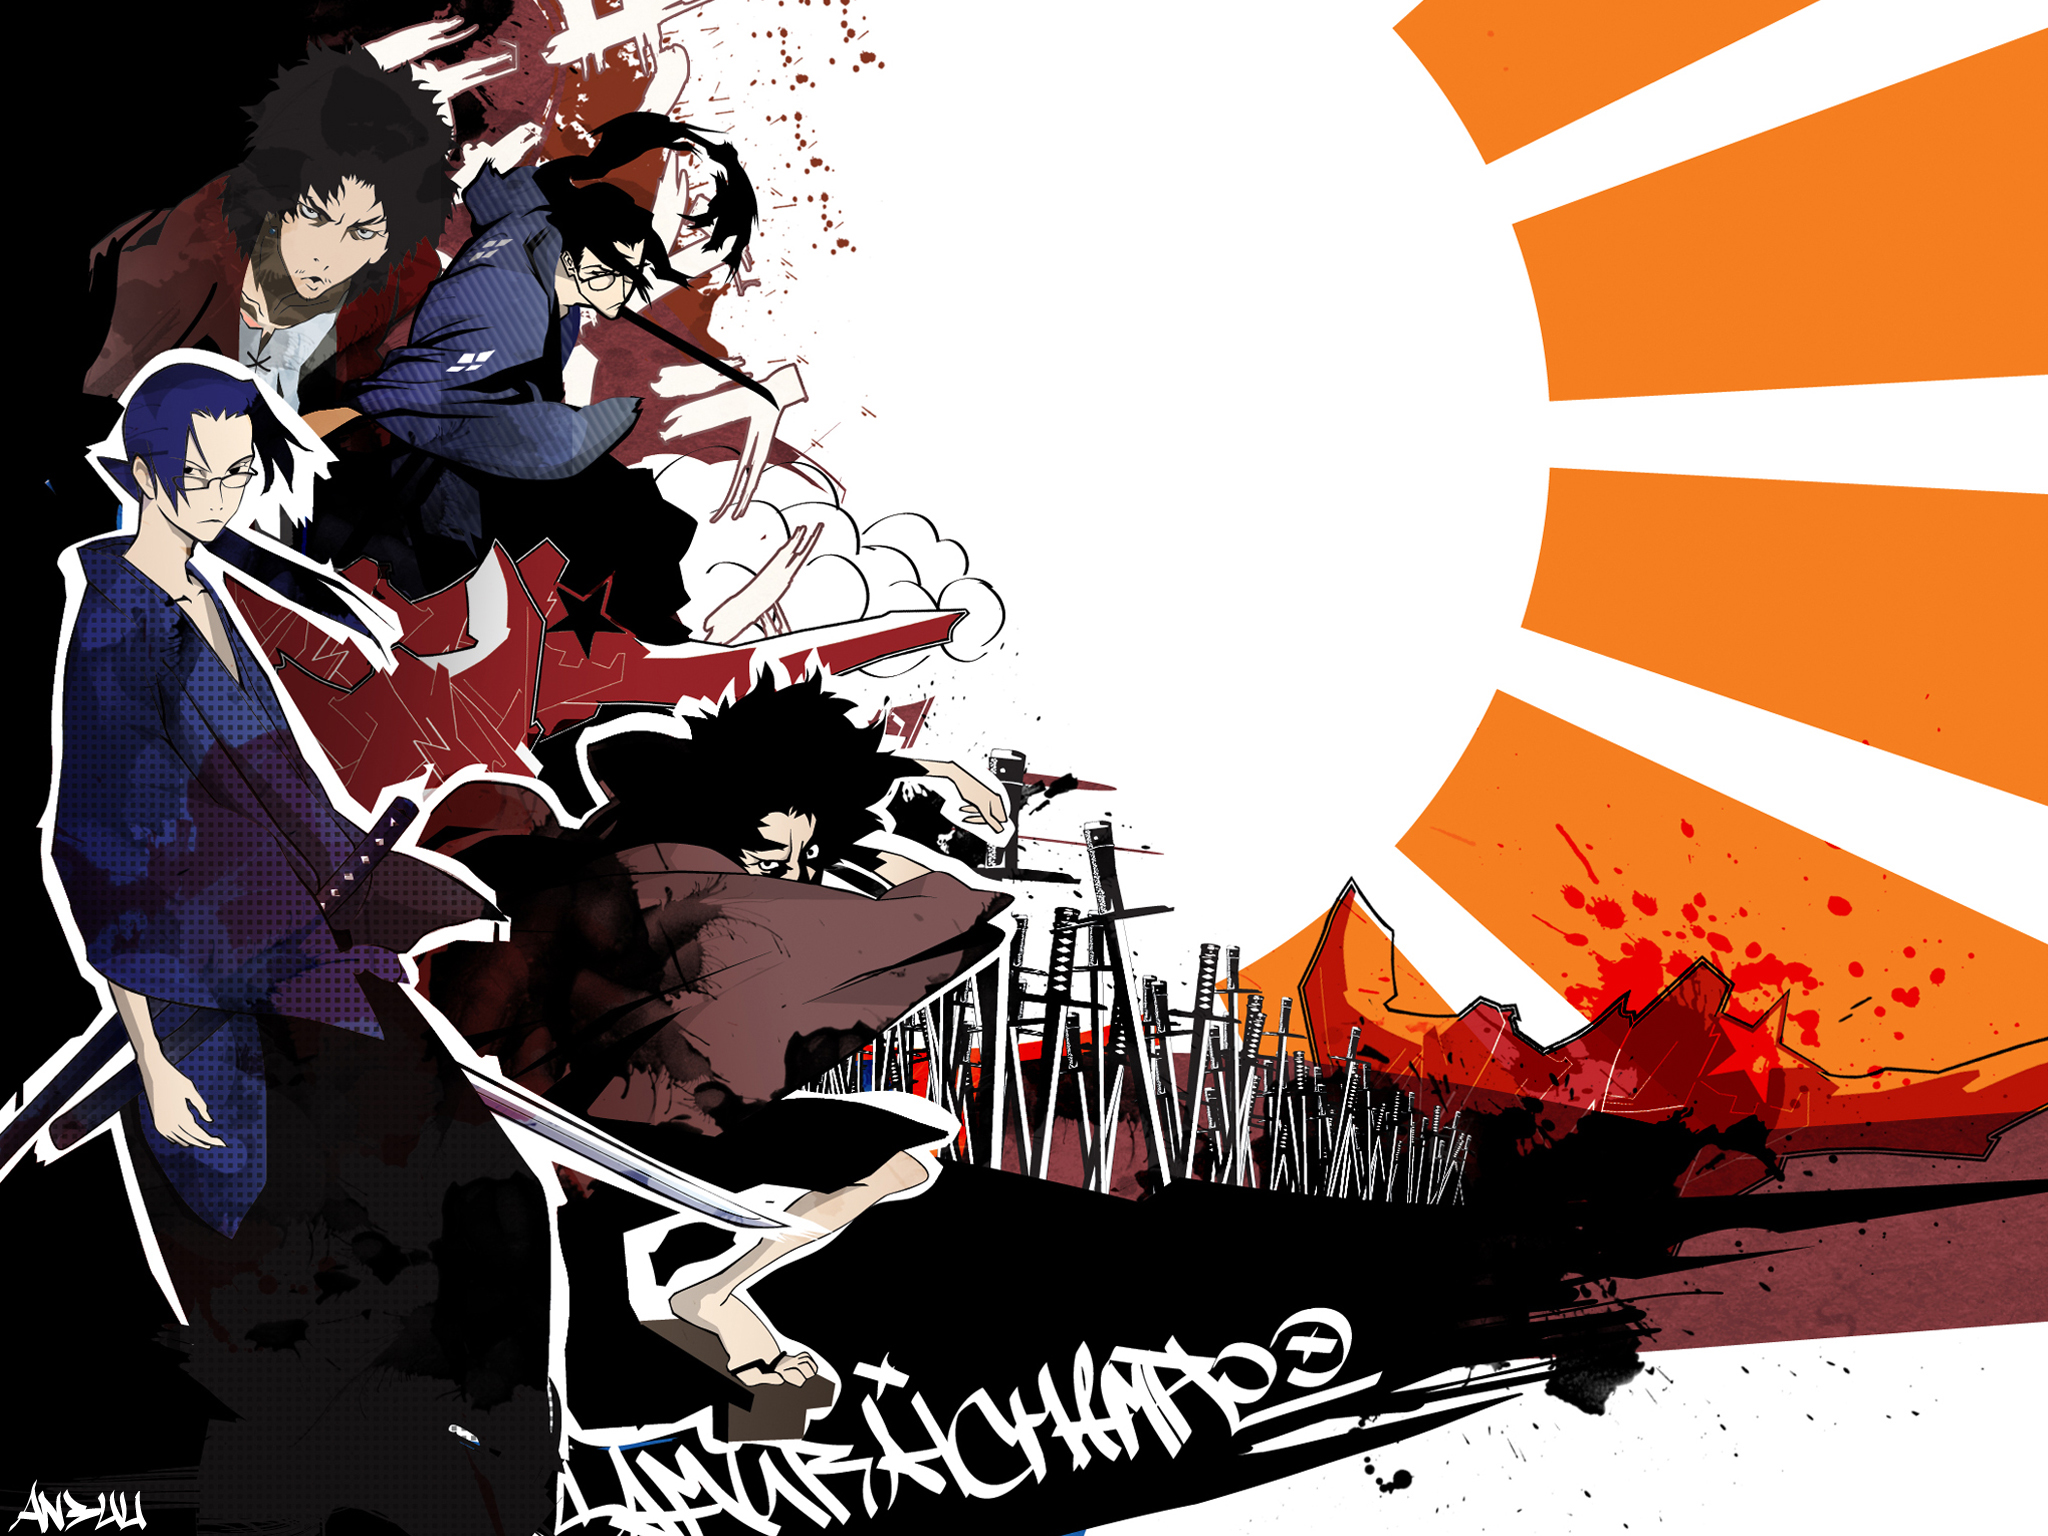 Samurai Champloo desktop wallpaper featuring anime characters.